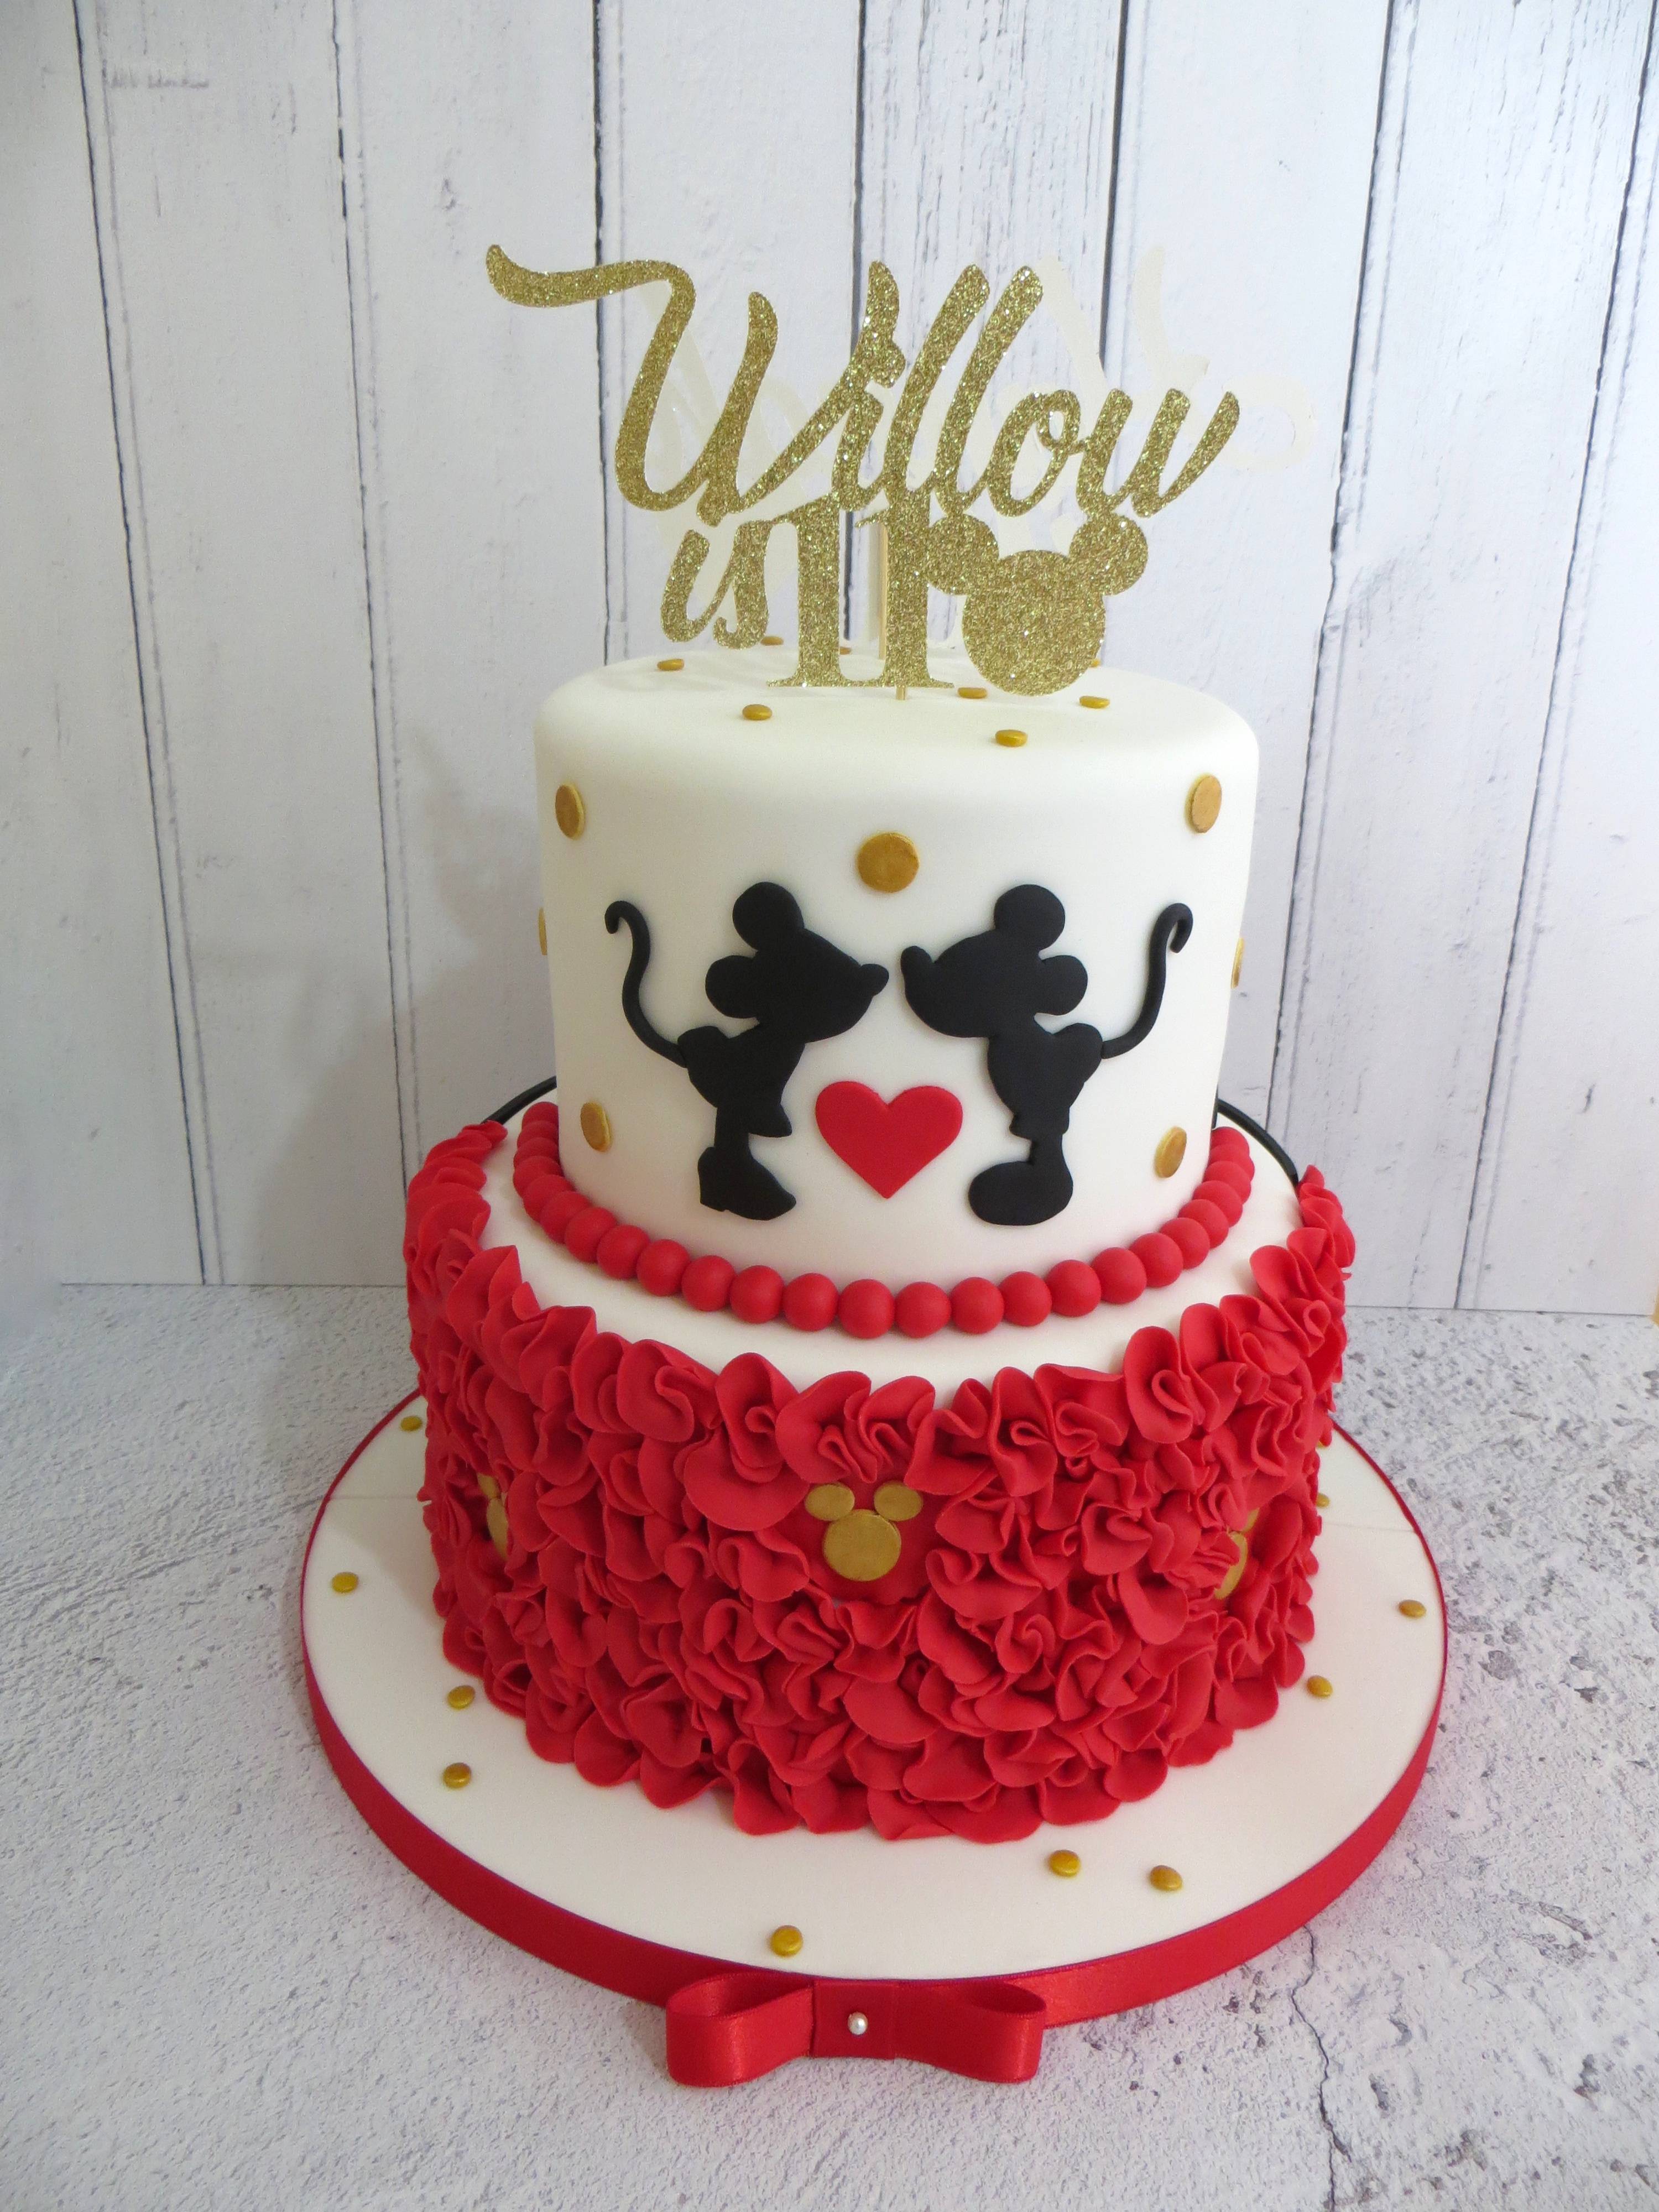 Willow's 11th Birthday Cake